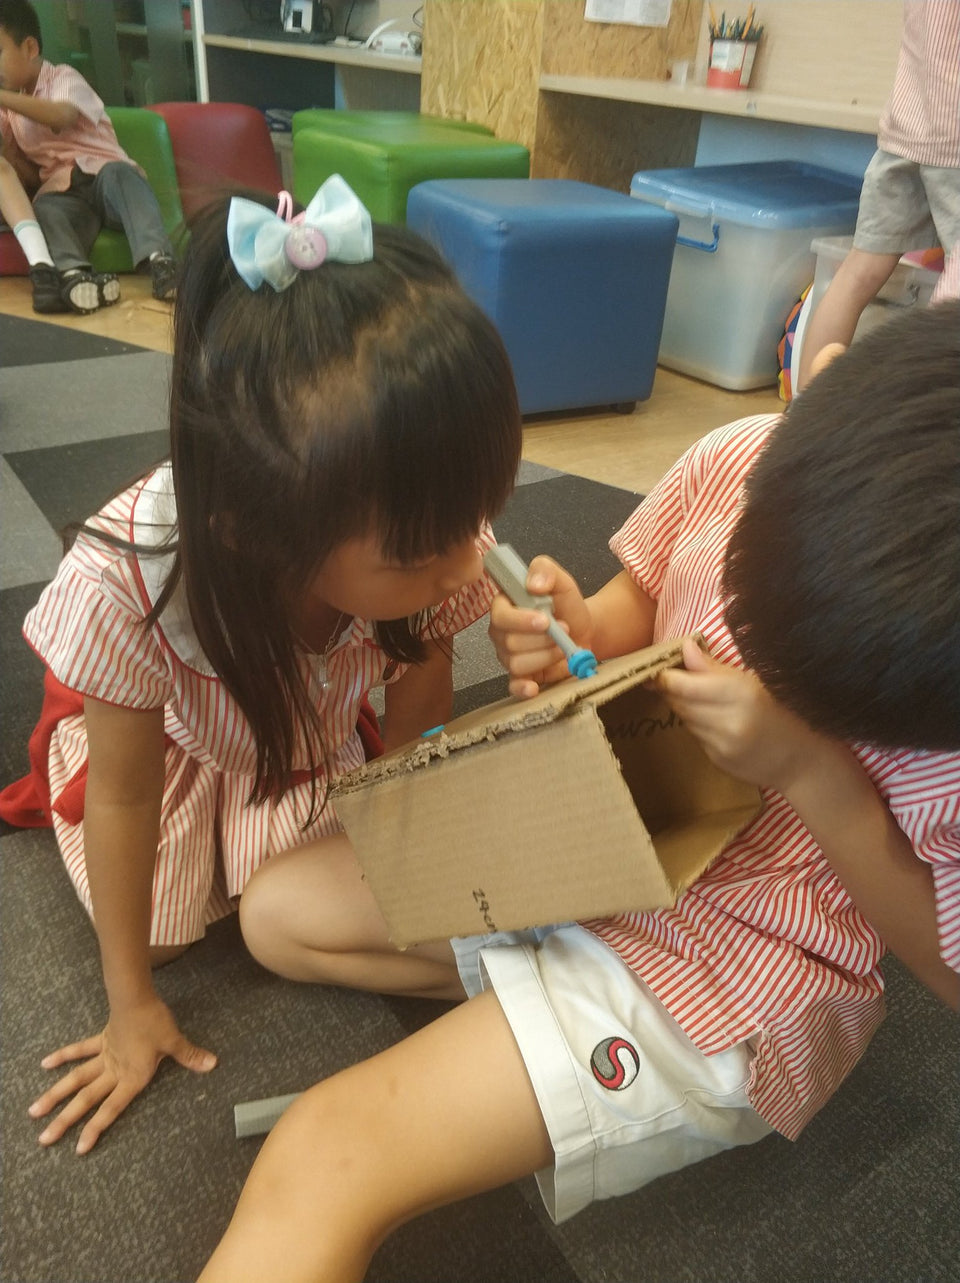 Makedo cardboard construction in the classroom shows fantastic teamwork